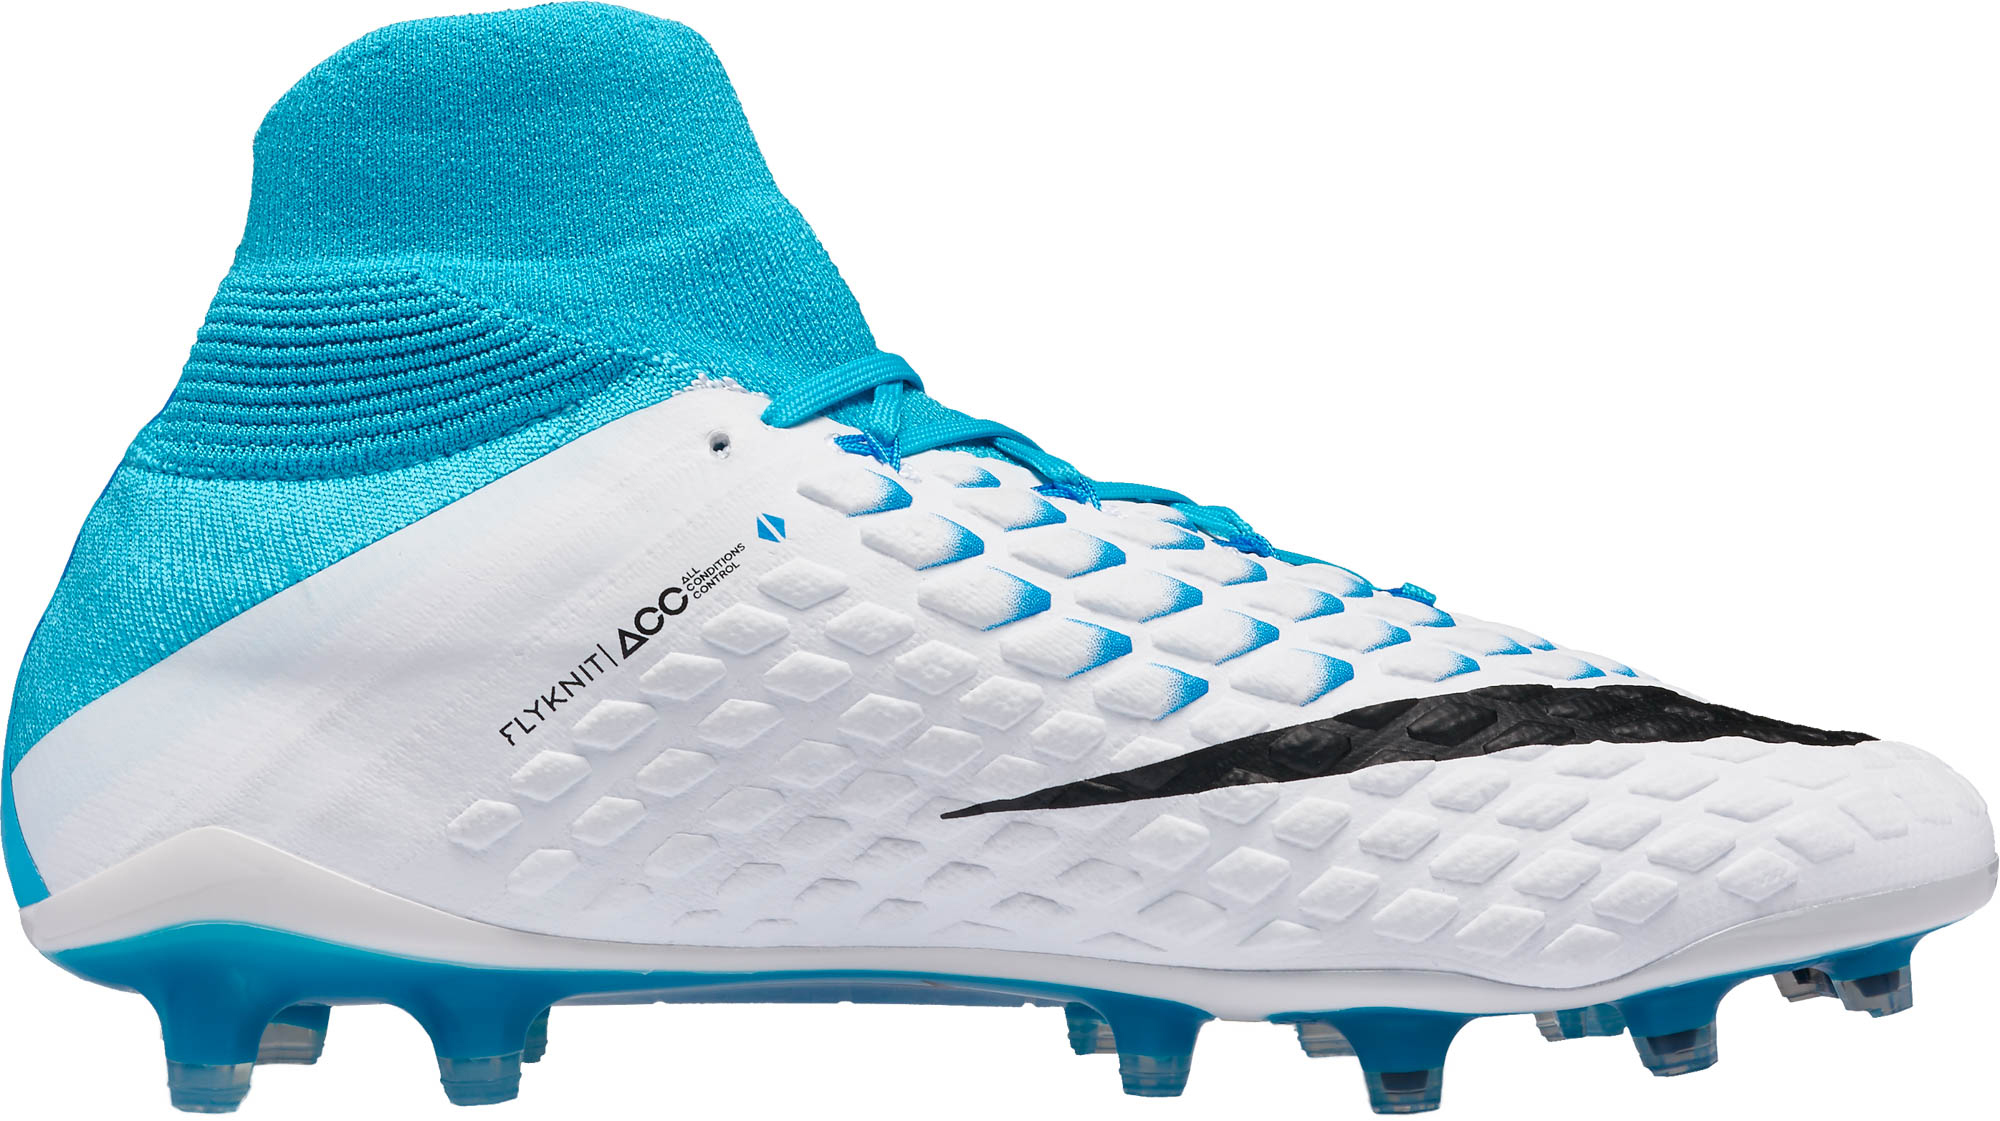 Nike Hypervenom Phantom III DF - Soccer Cleats